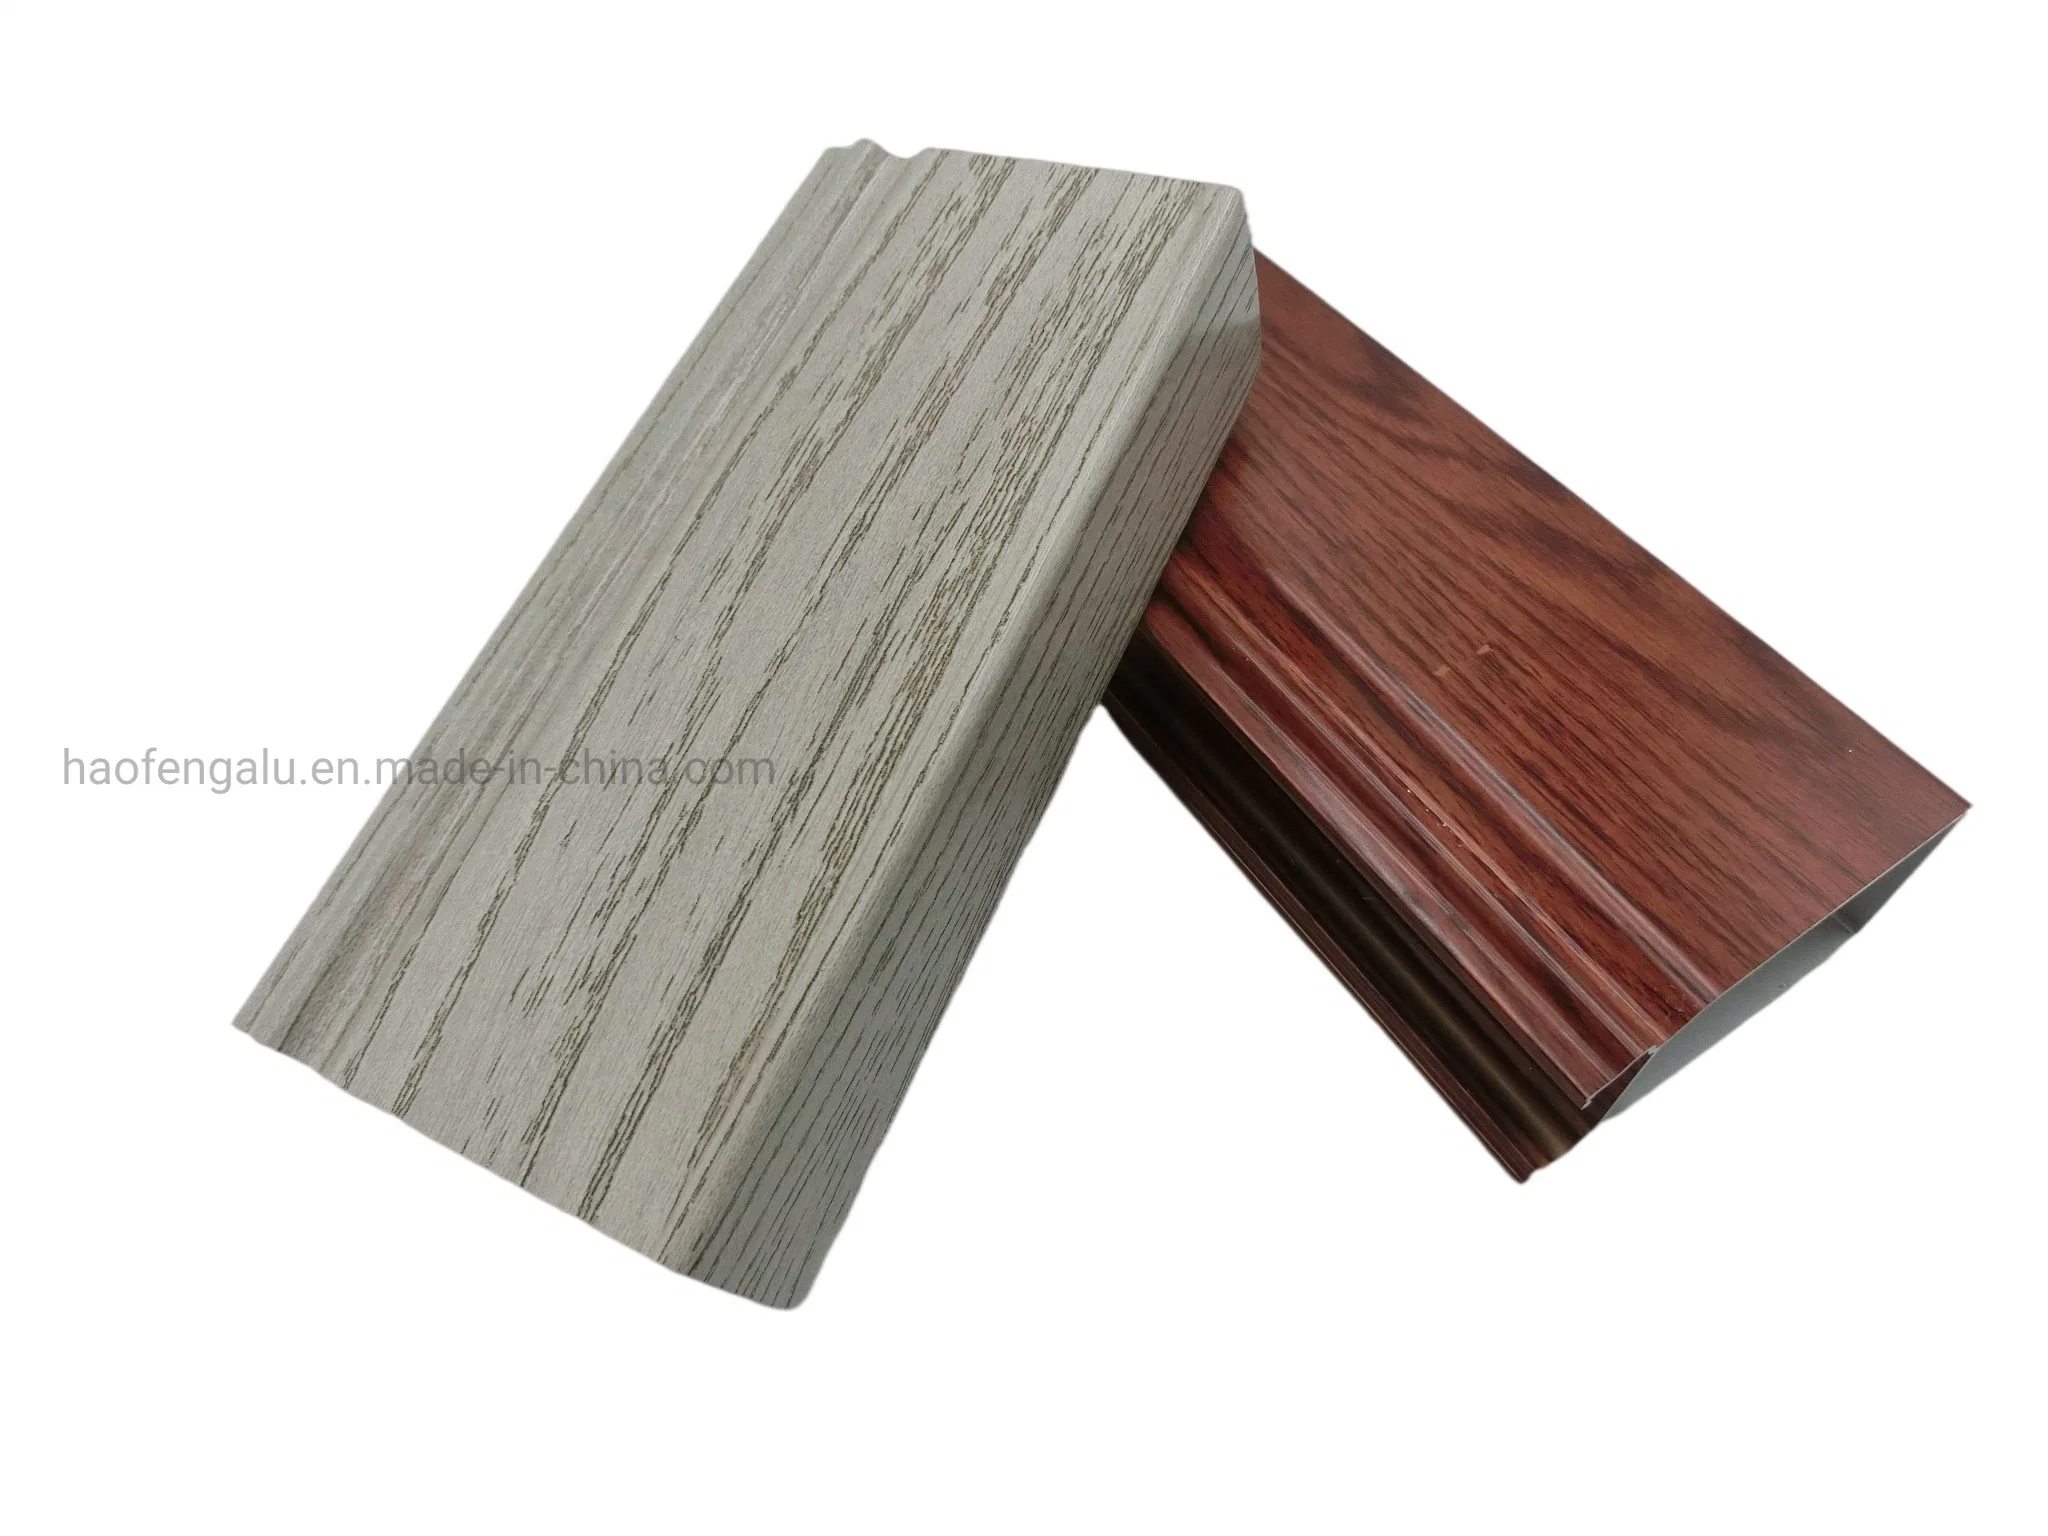 Wood Grain Powder Coating Anodized Aluminium/Aluminum Profile Customized Products